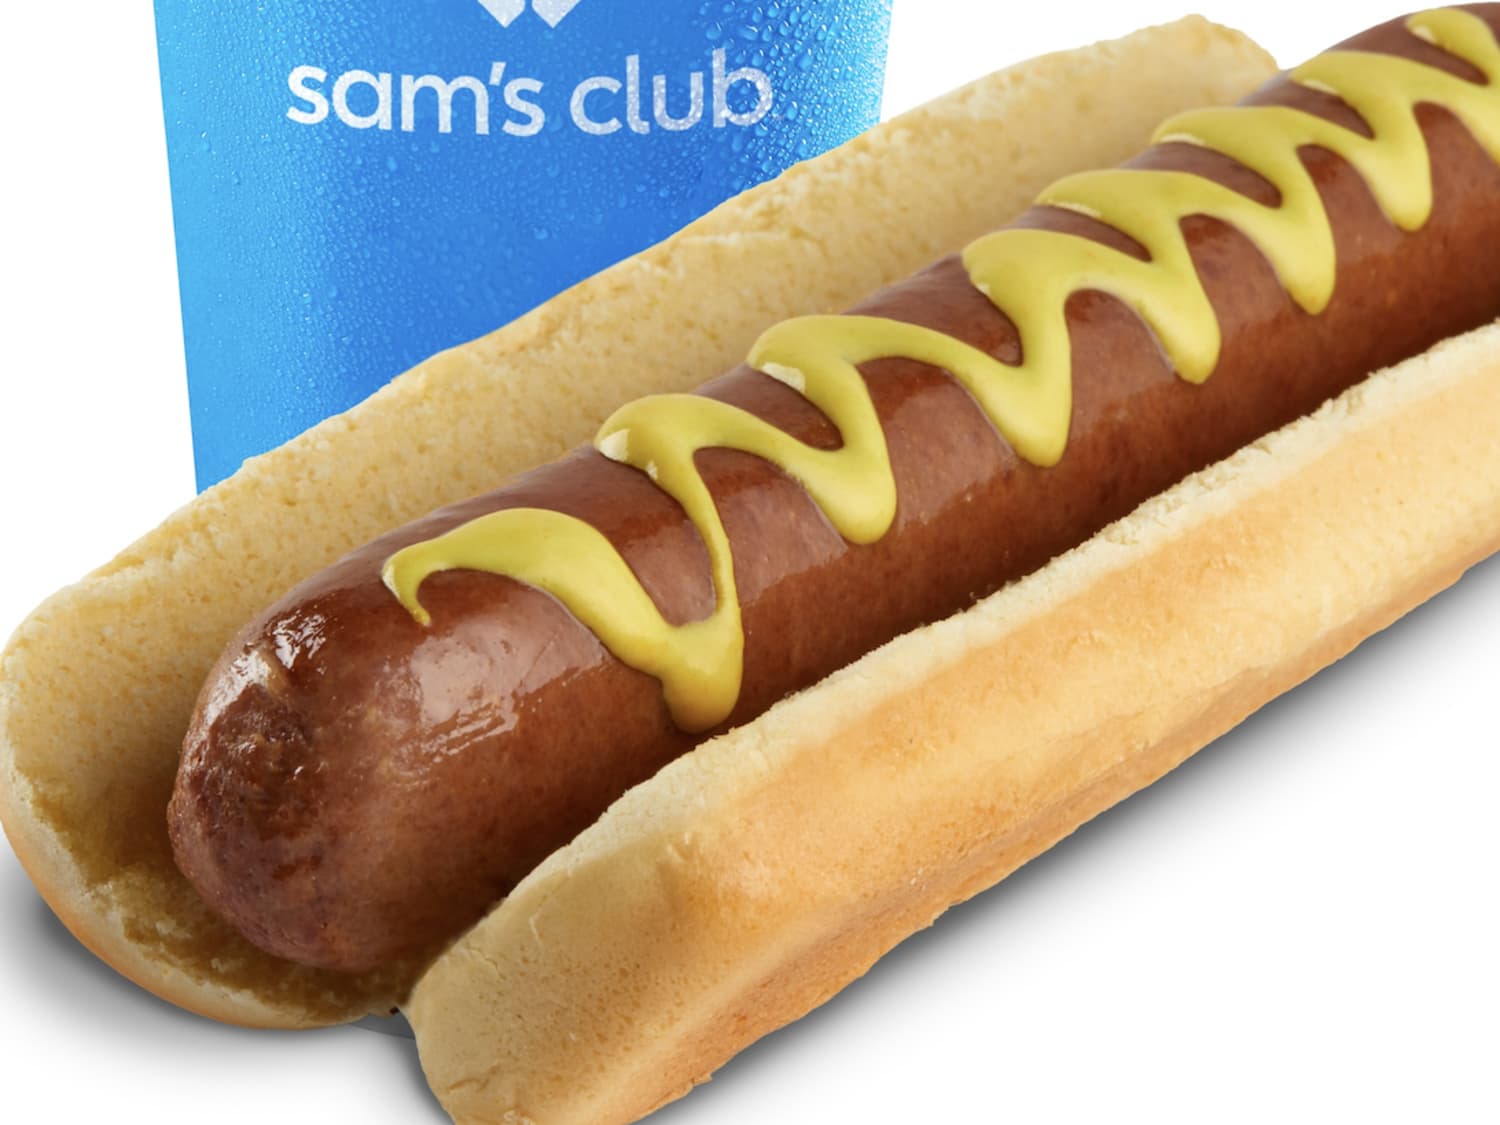 Costco $1.50 Hot Dog Deal Undercut on Price by Sam's Club